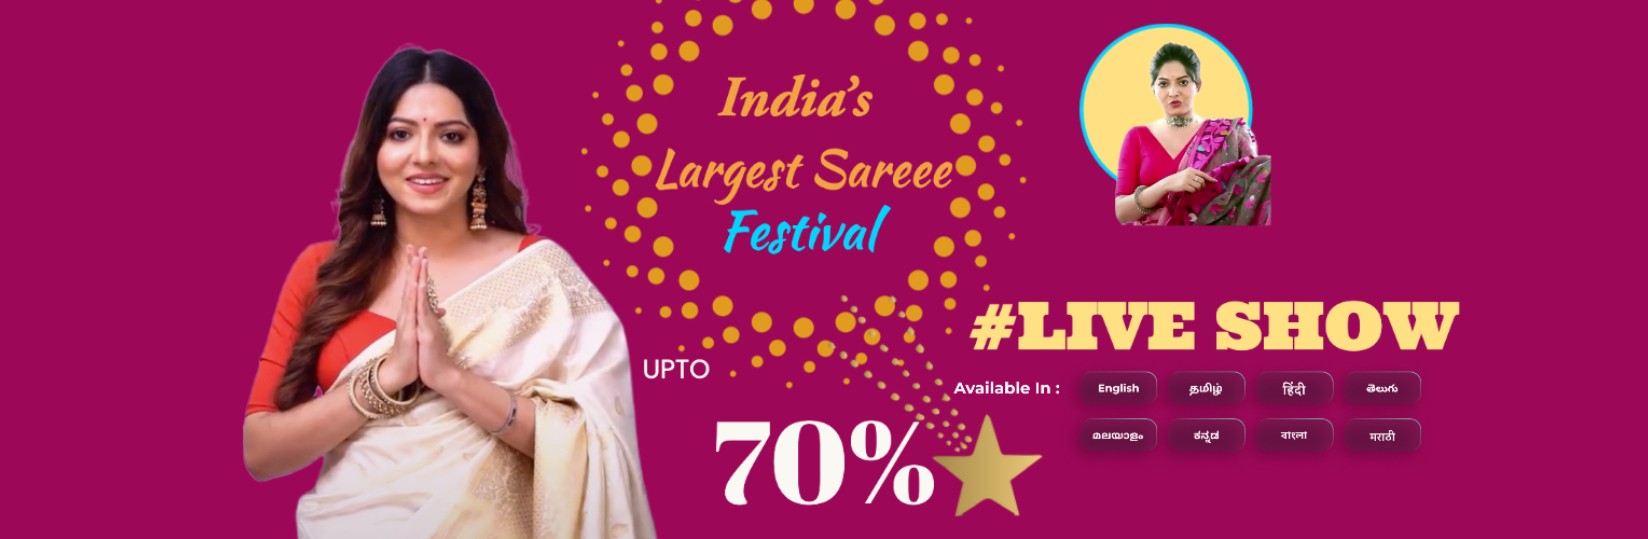 Livebox India Festival Saree sale